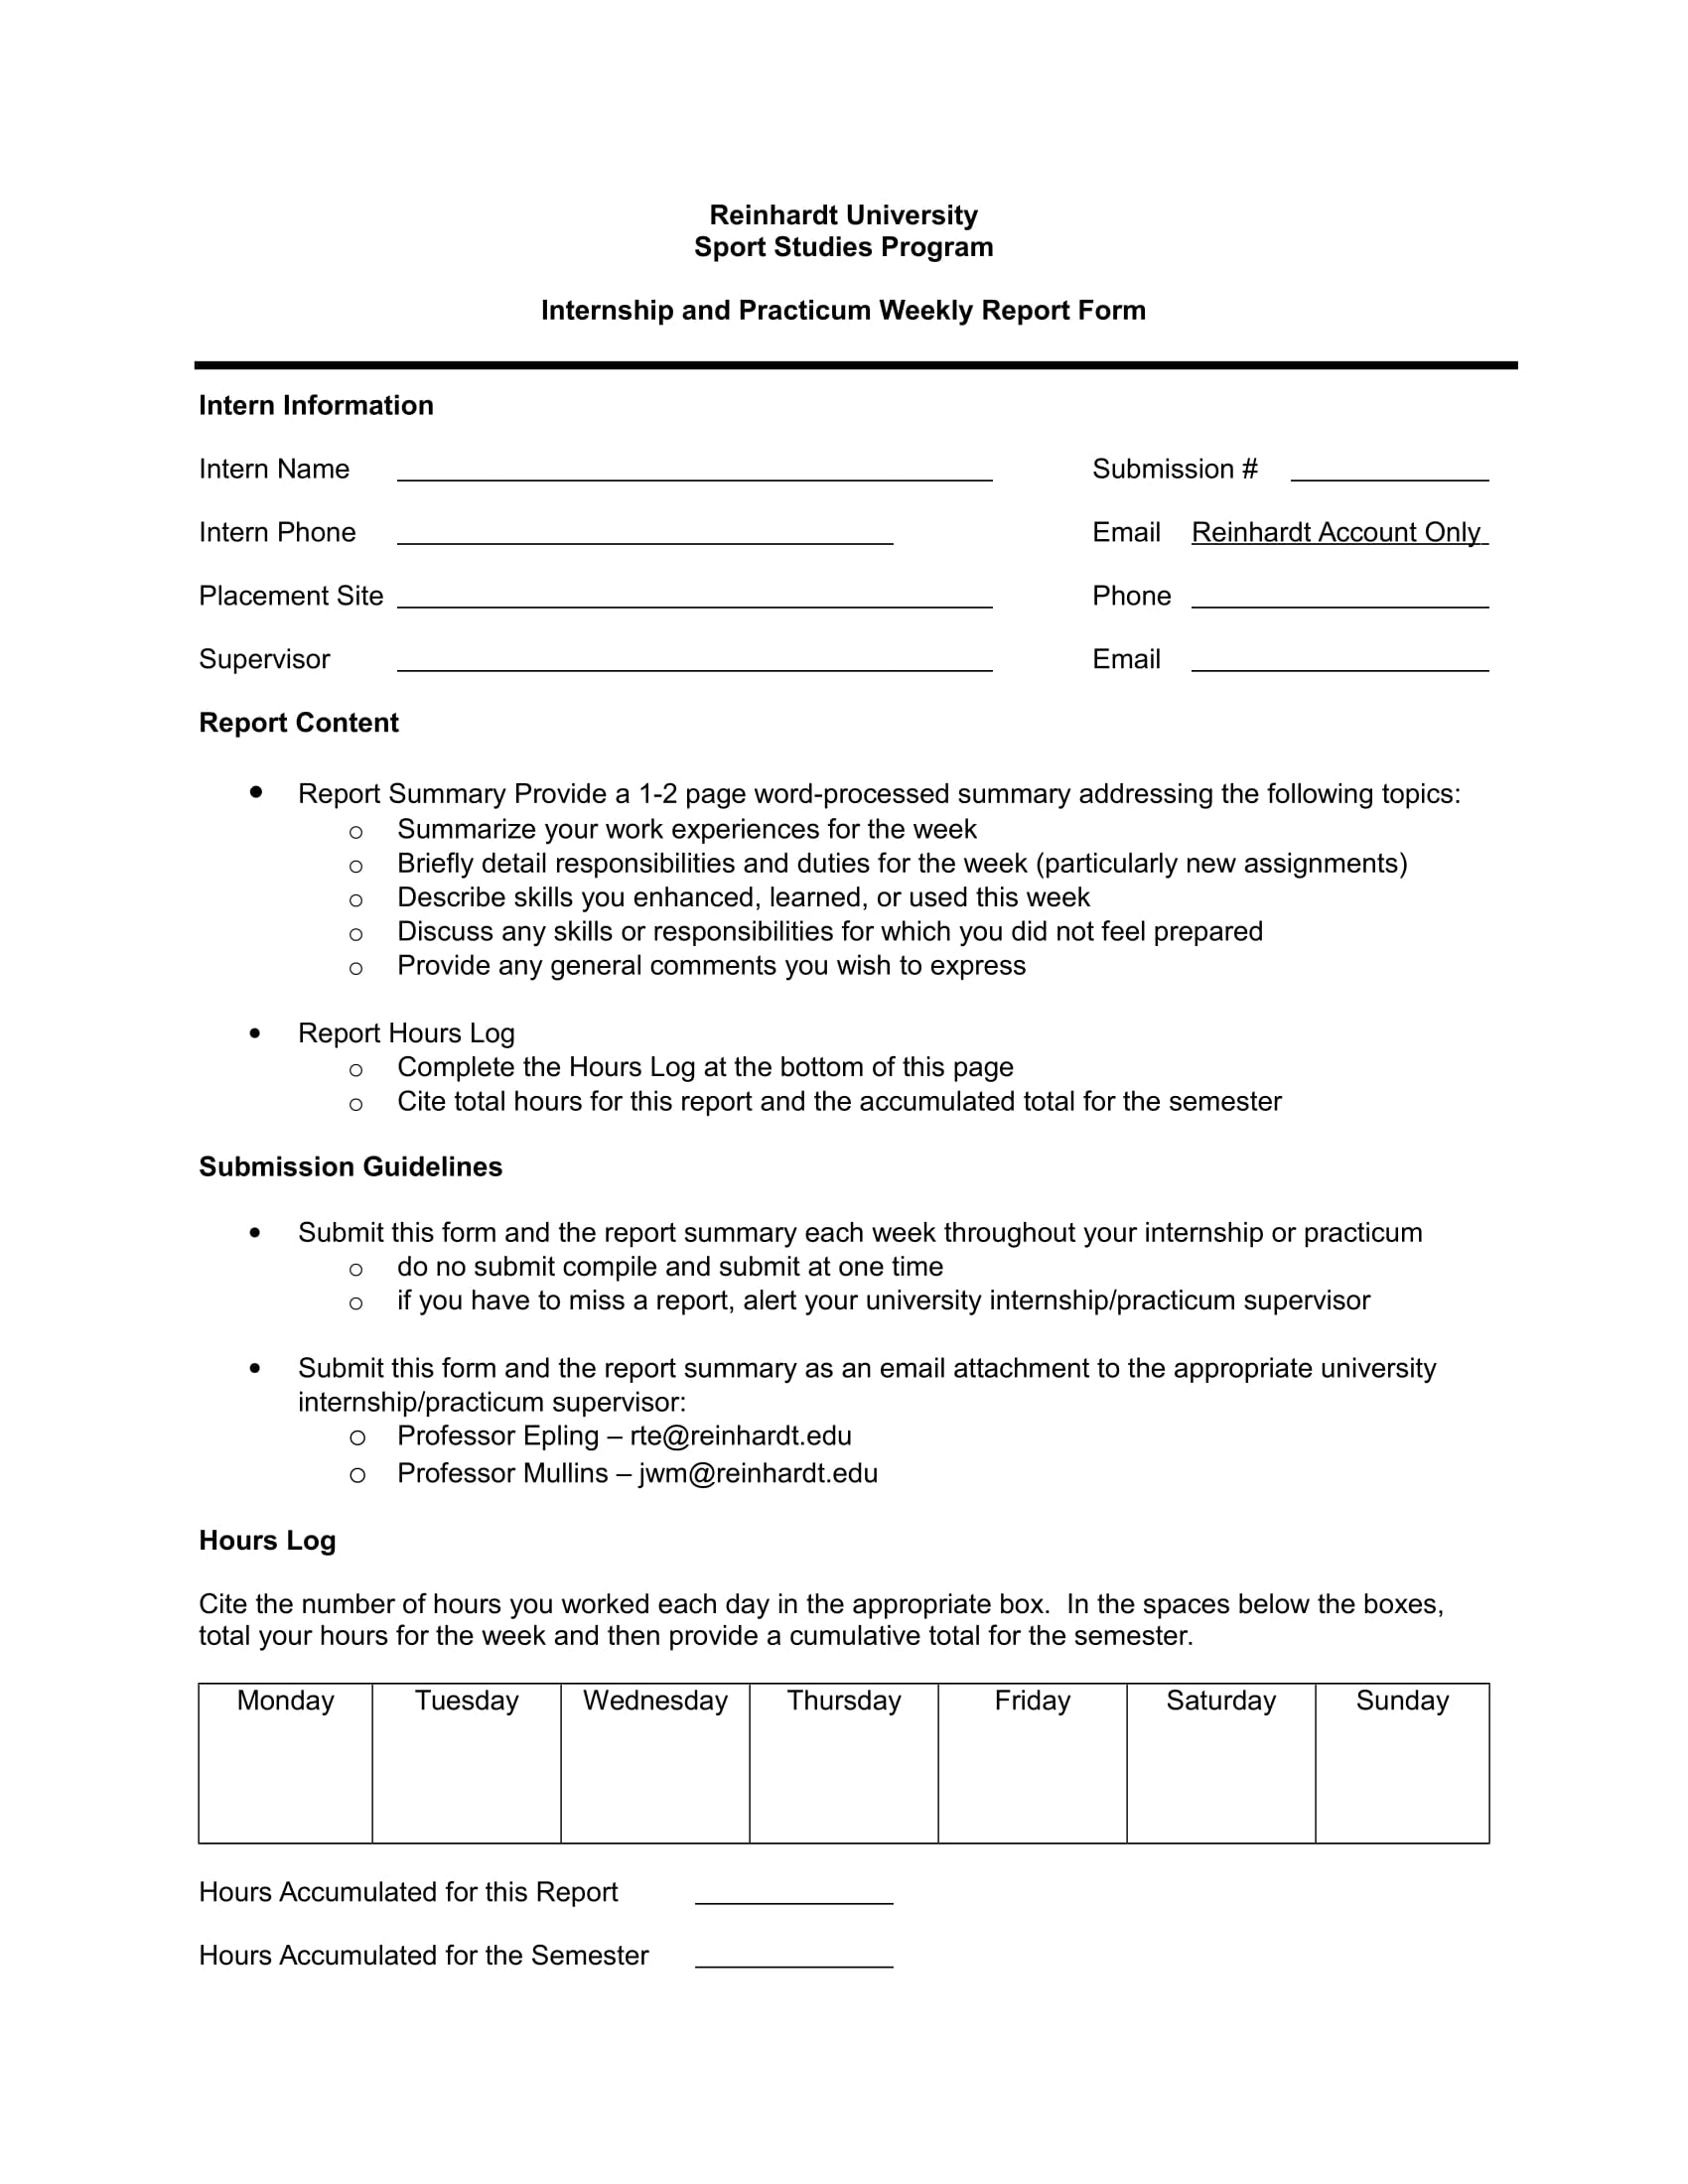 internship practicum weekly report form 1